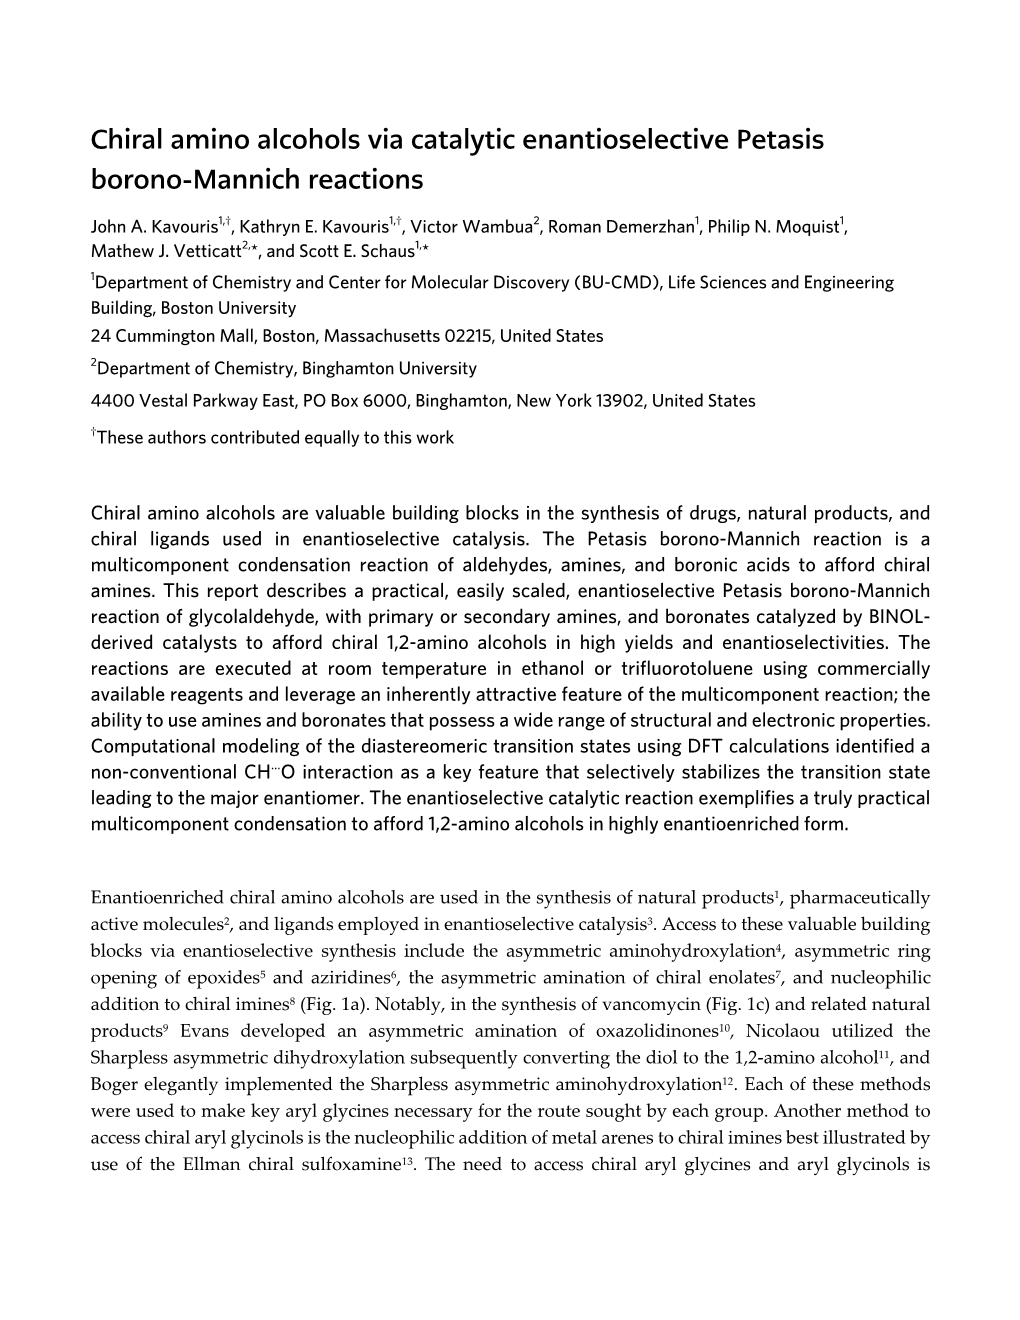 Chiral Amino Alcohols Via Catalytic Enantioselective Petasis Borono-Mannich Reactions